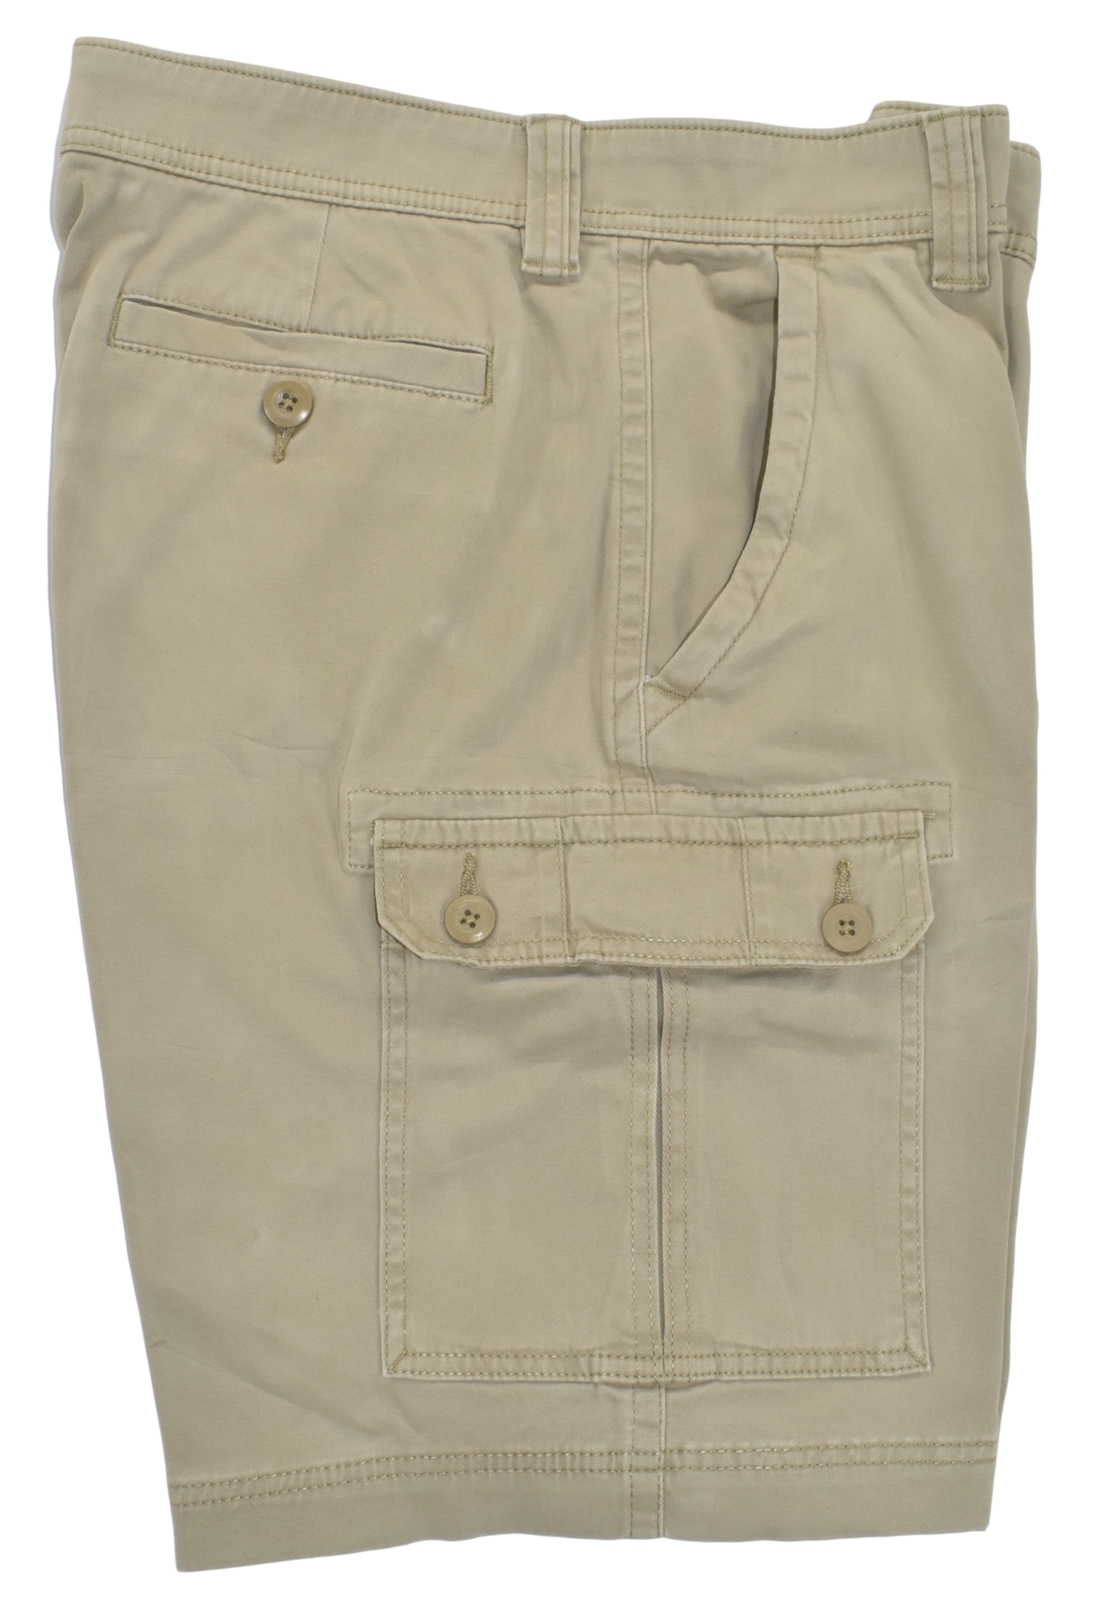 St. John's Bay Men's Cargo Shorts - British Khaki (Size 32) - Shorts